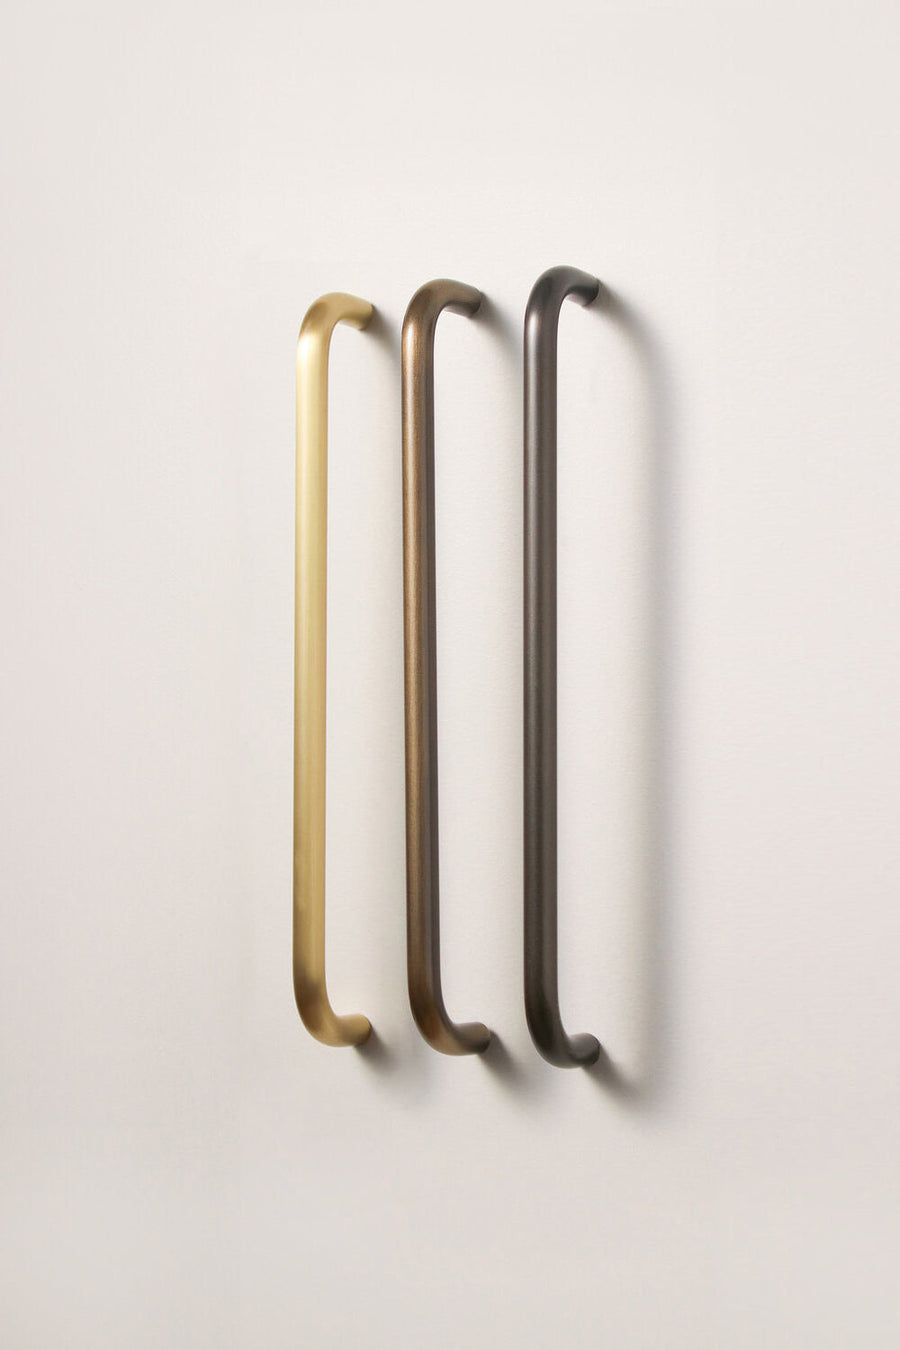 Beam Handle Sample - 600 L x 12 Dia - Aged Brass